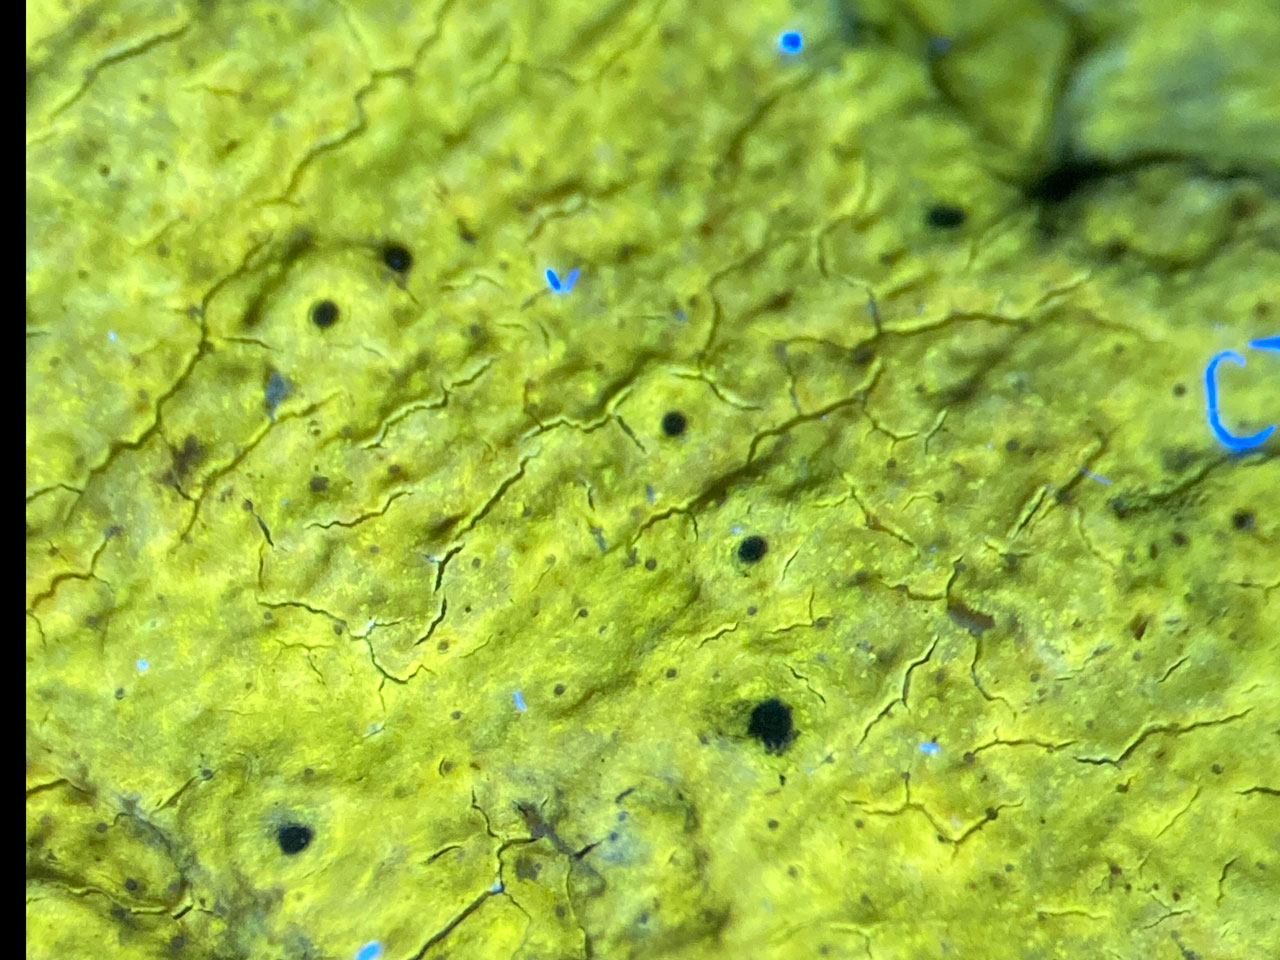 Pyrenula dermatodes UV+ bright yellow